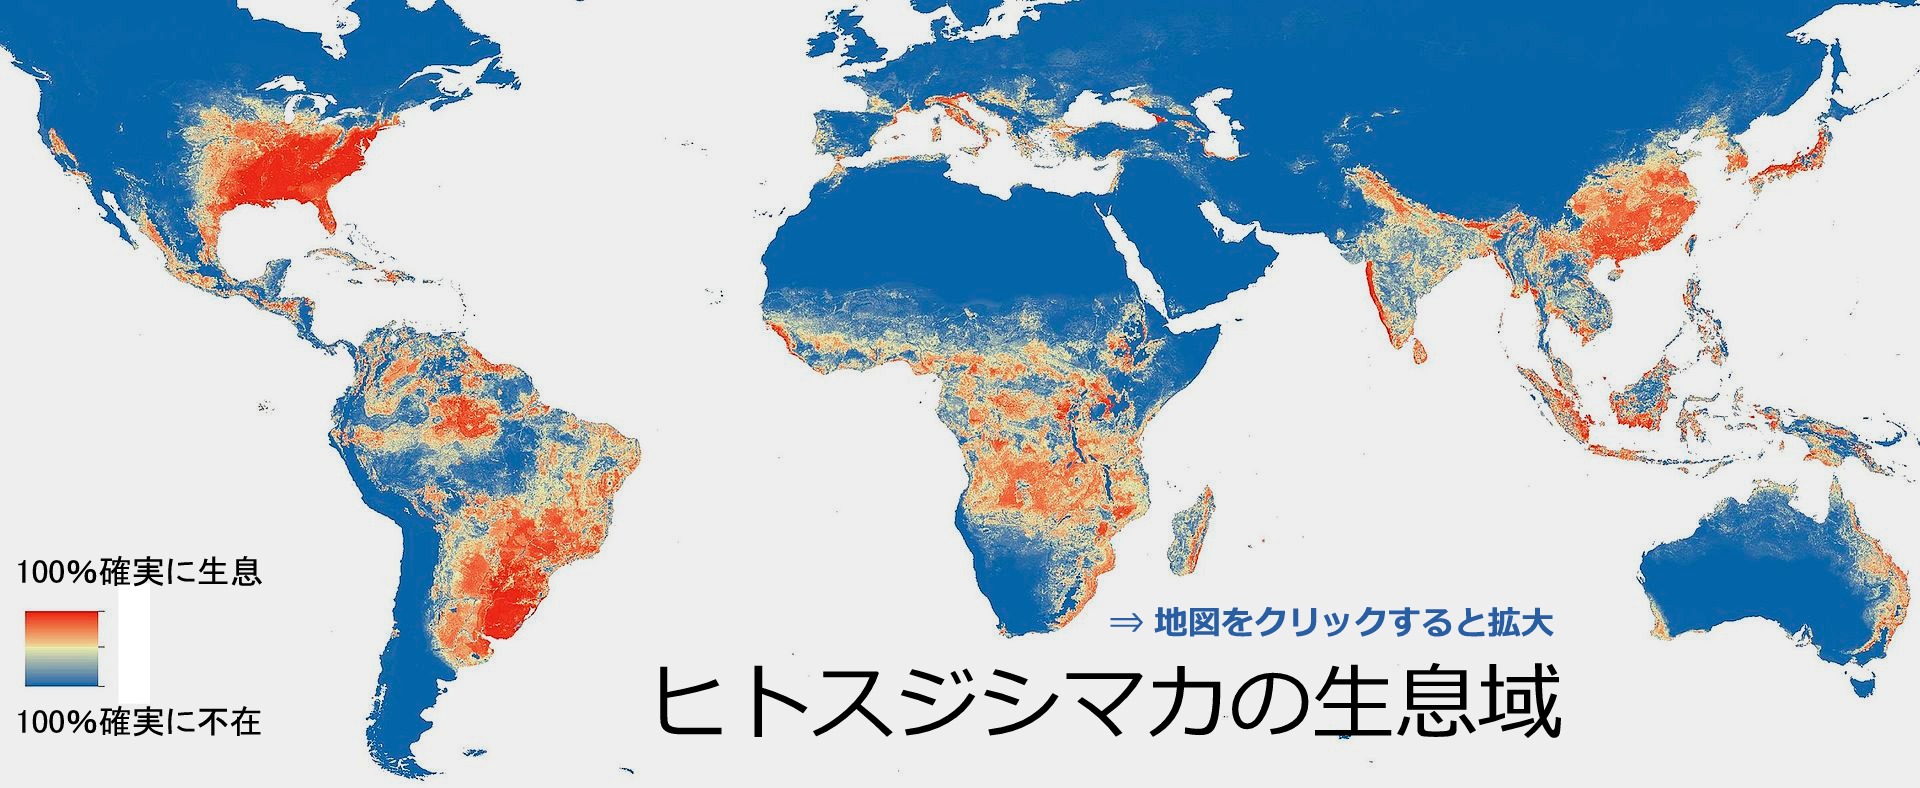 Global Aedes albopictus distribution 2015.jpg